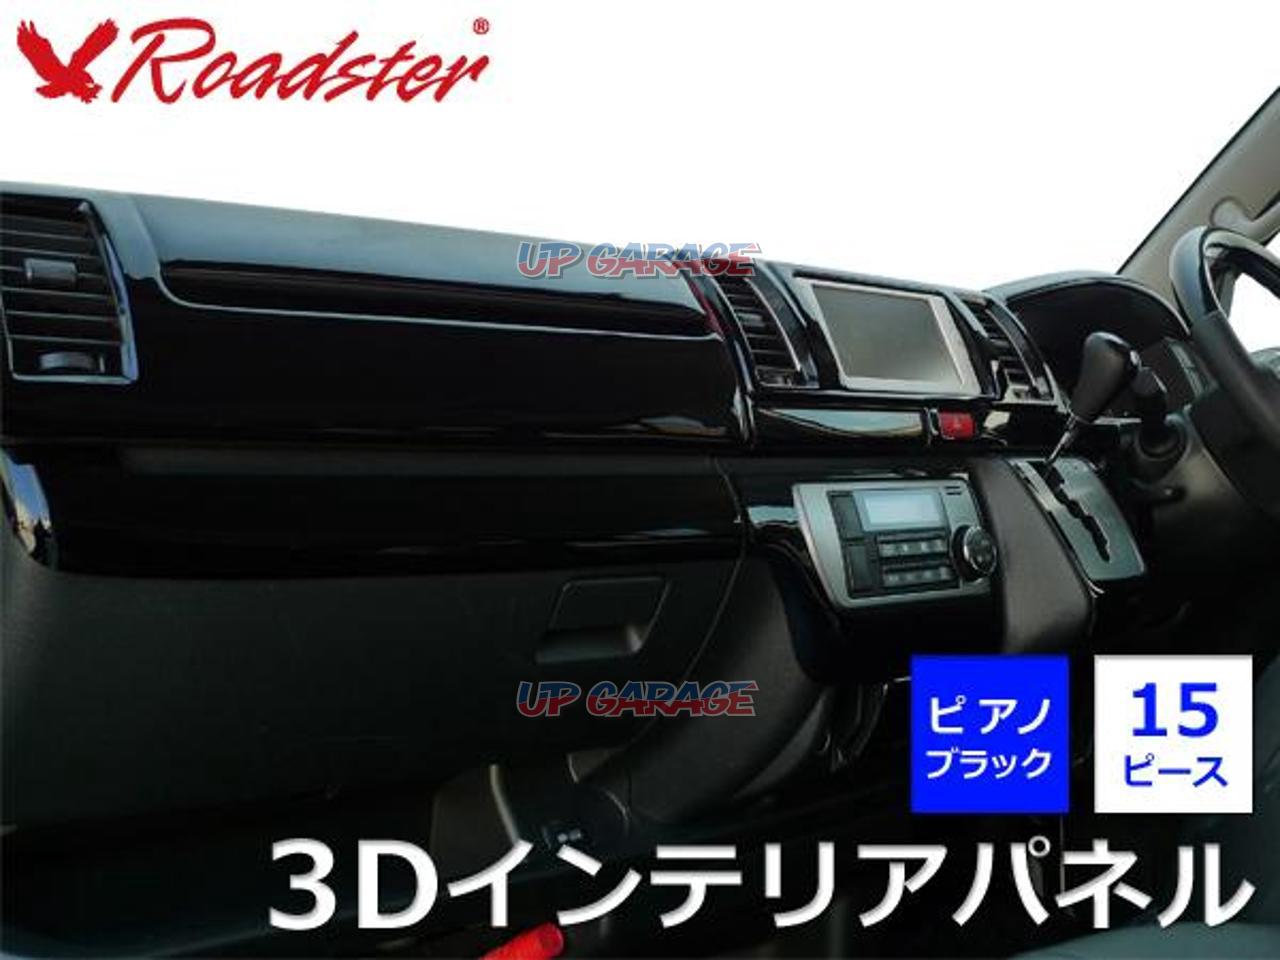 Roadster Hiace 200 For Type 4 3d Interior Panel 15 Pieces Piano Black Wide Body Auto Air Conditioner Car Interior Accessories Croooober